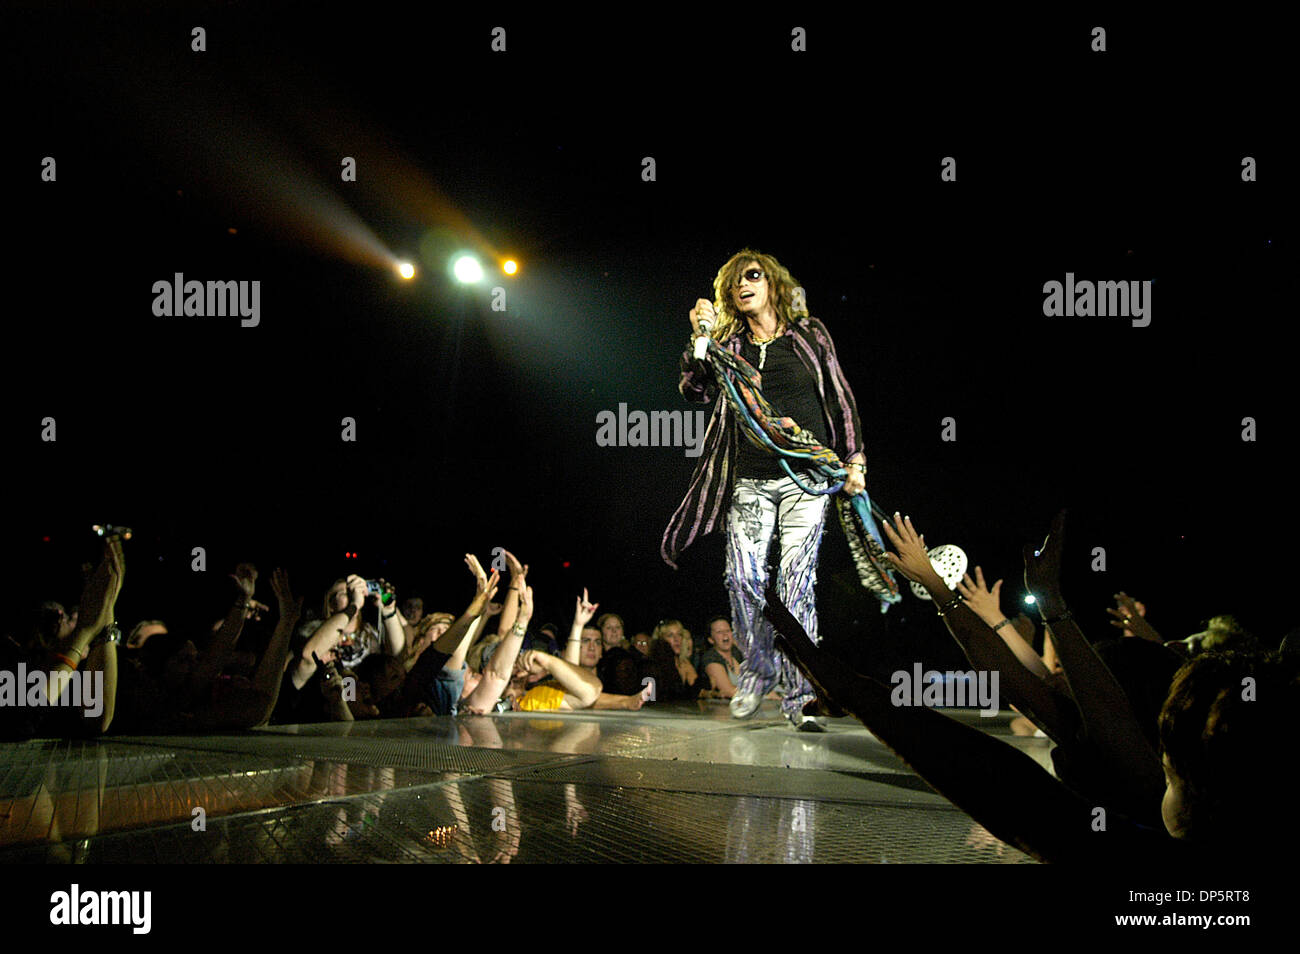 Sep 23, 2006 ; Camden, New Jersey, USA ; Steven Tyler, chanteur d'Aerosmith, effectue au centre Tweeter à Camden, New Jersey. Crédit obligatoire : Photo par Brooks Smothers/ZUMA Press. (©) Copyright 2006 par Brooks Smothers Banque D'Images